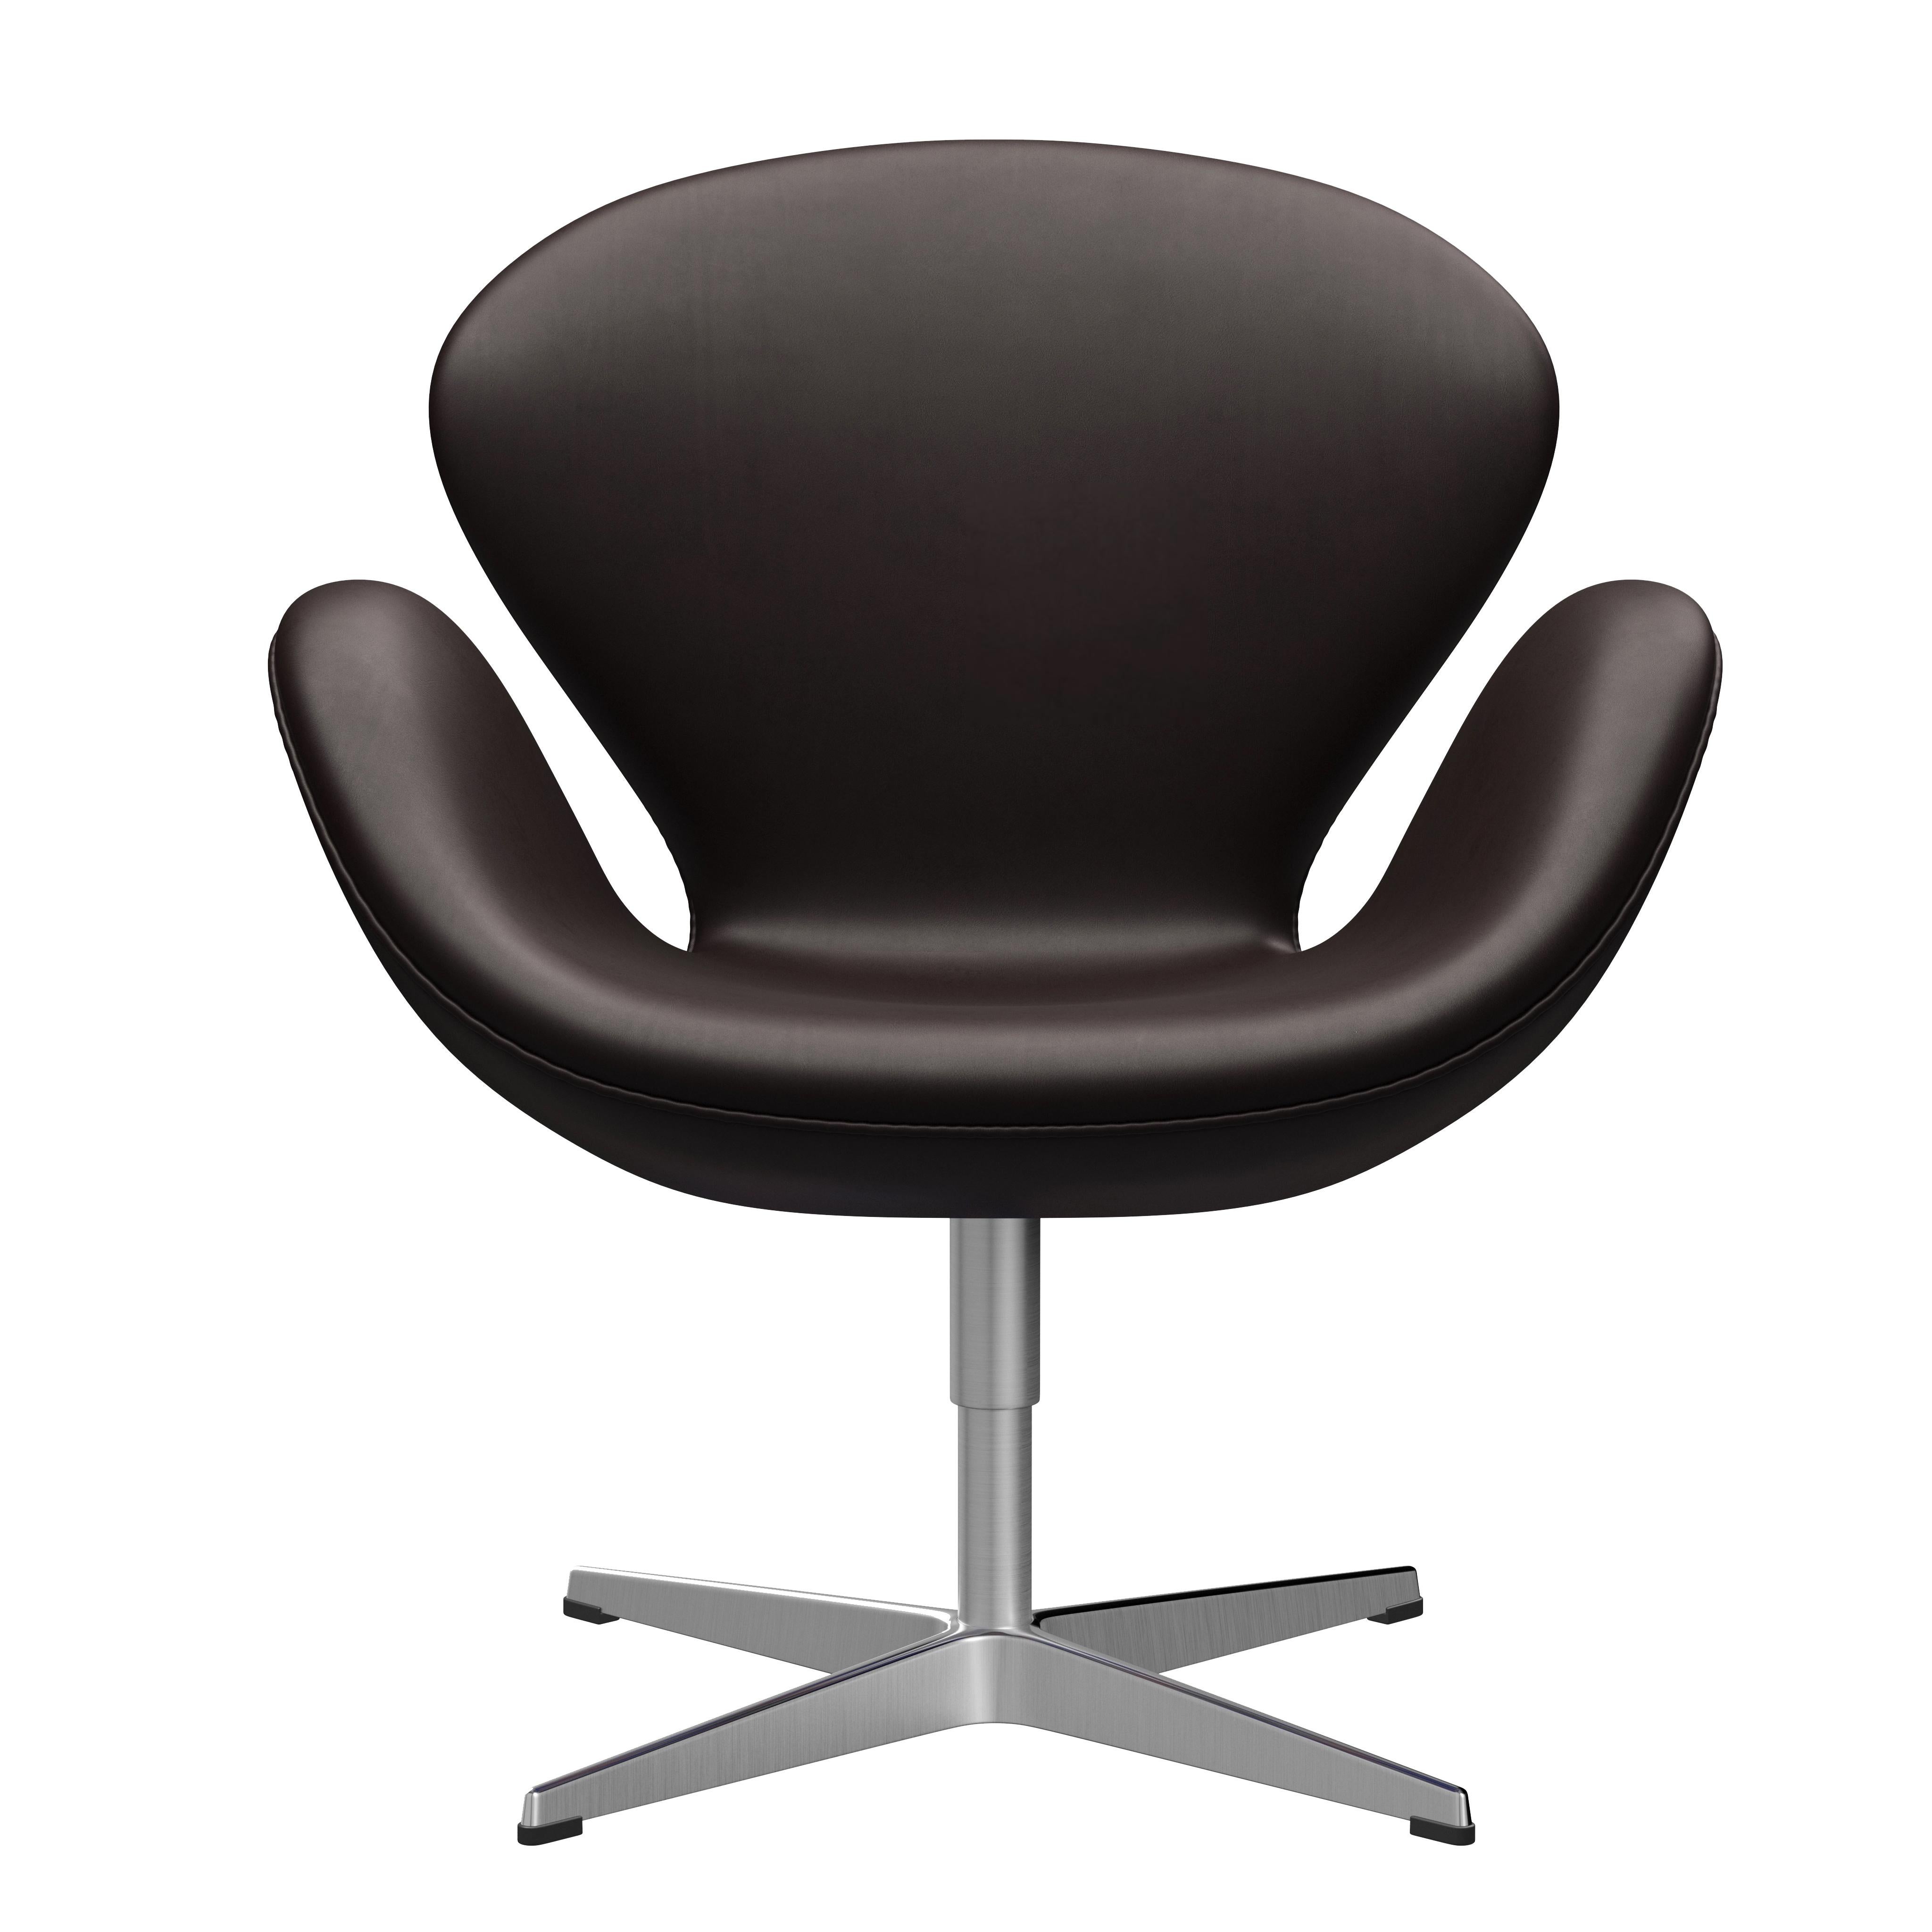 Arne Jacobsen 'Swan' Chair for Fritz Hansen in Leather Upholstery (Cat. 5) For Sale 10